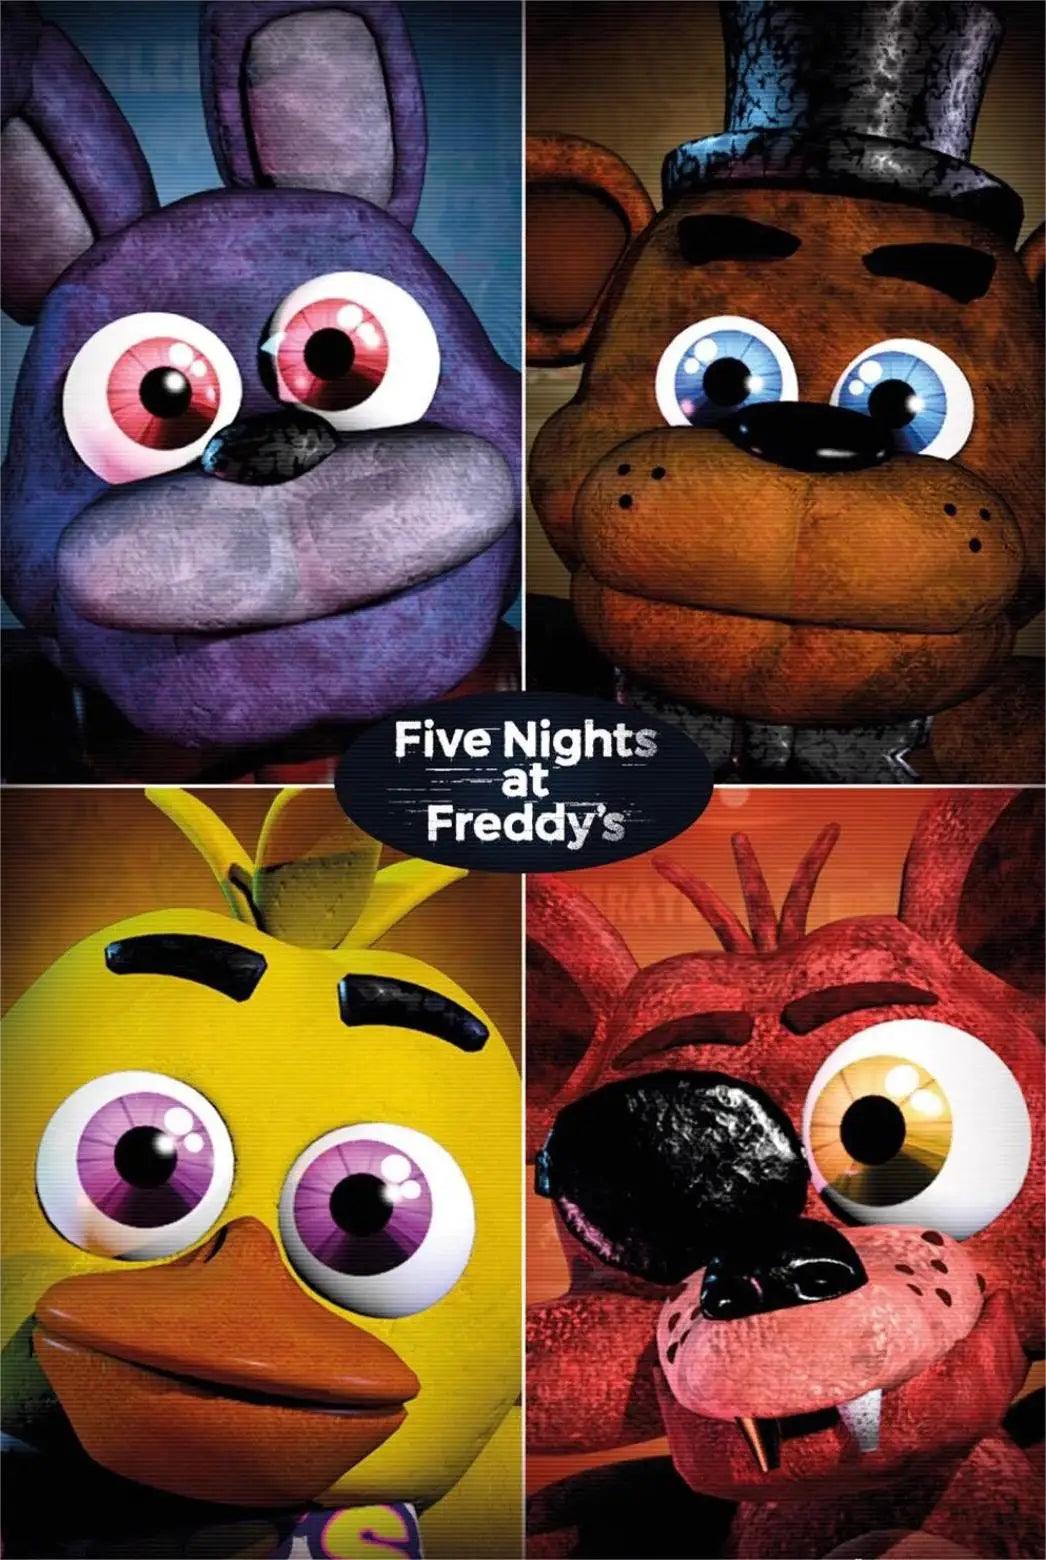 FNAF Five-nights-At-Freddys Premium Poster - Brand My Case